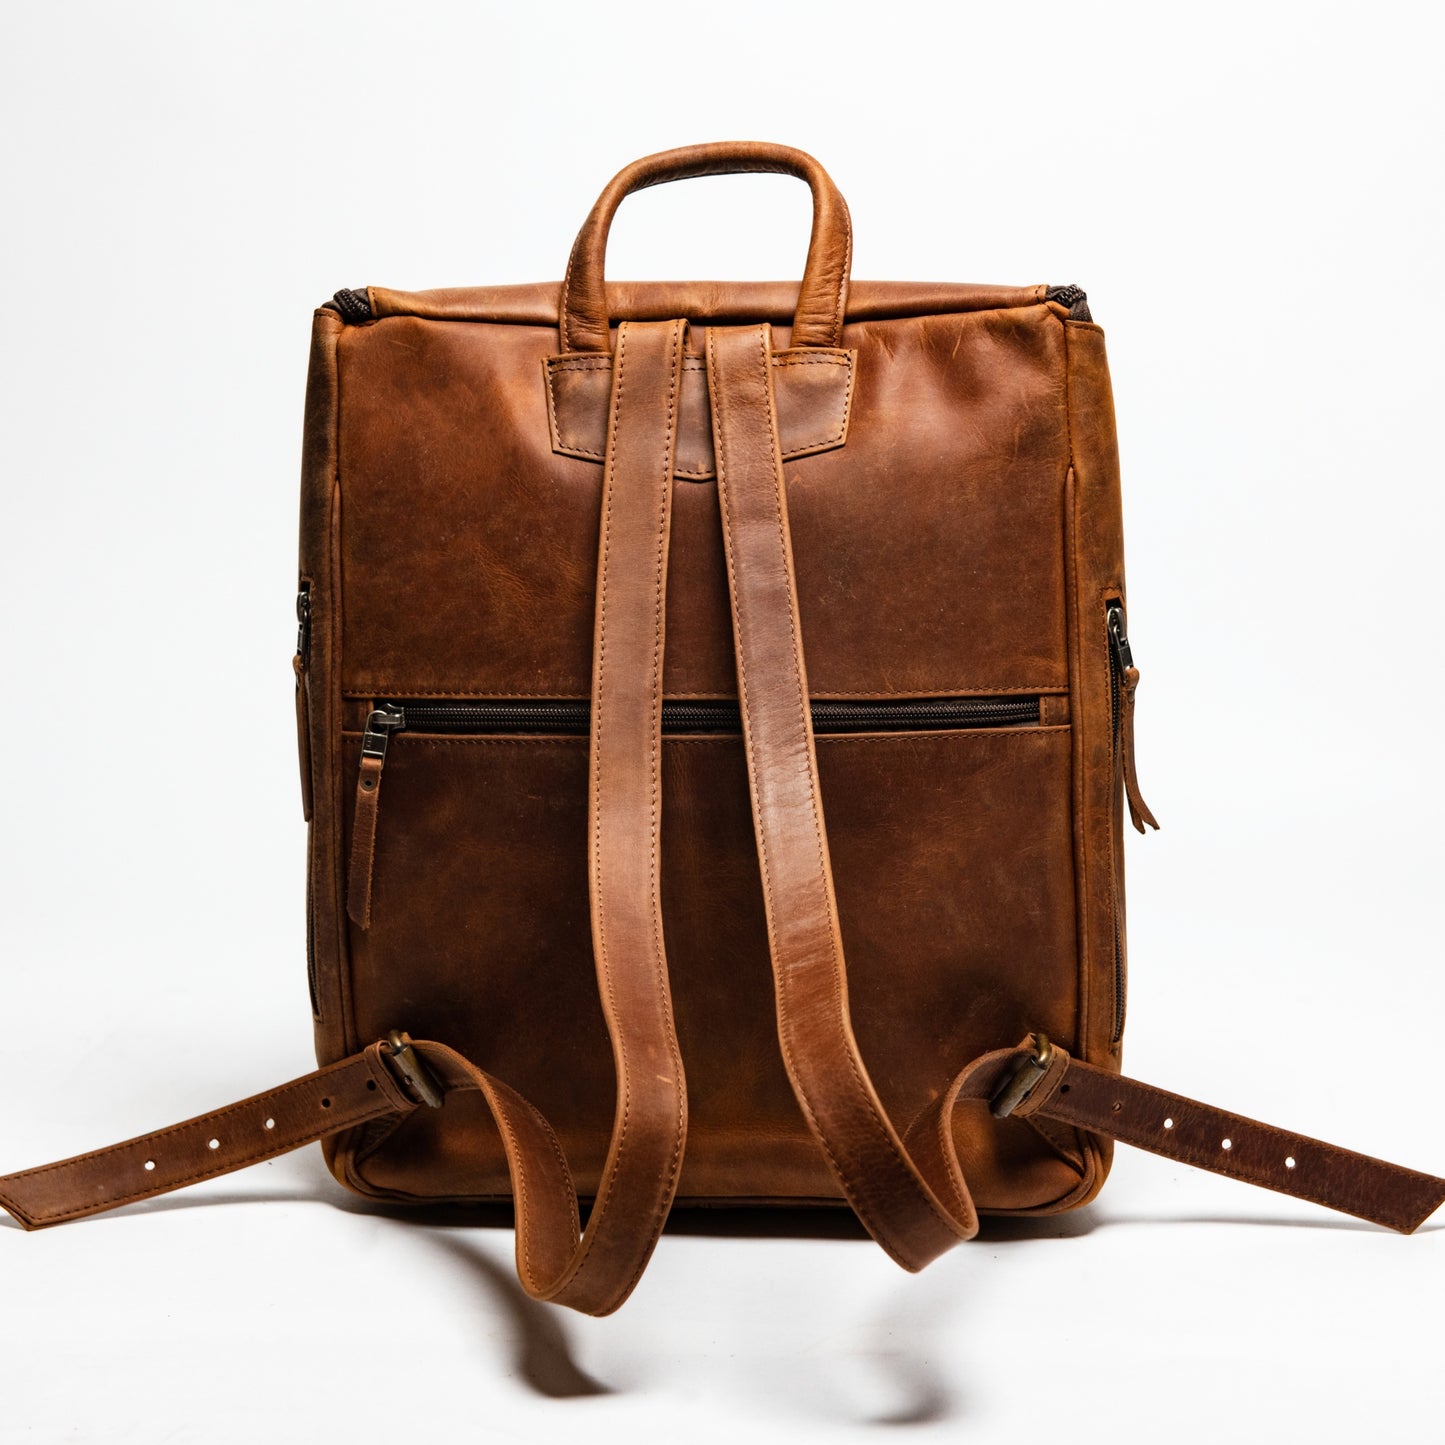 Student Leather Backpack - Saddle